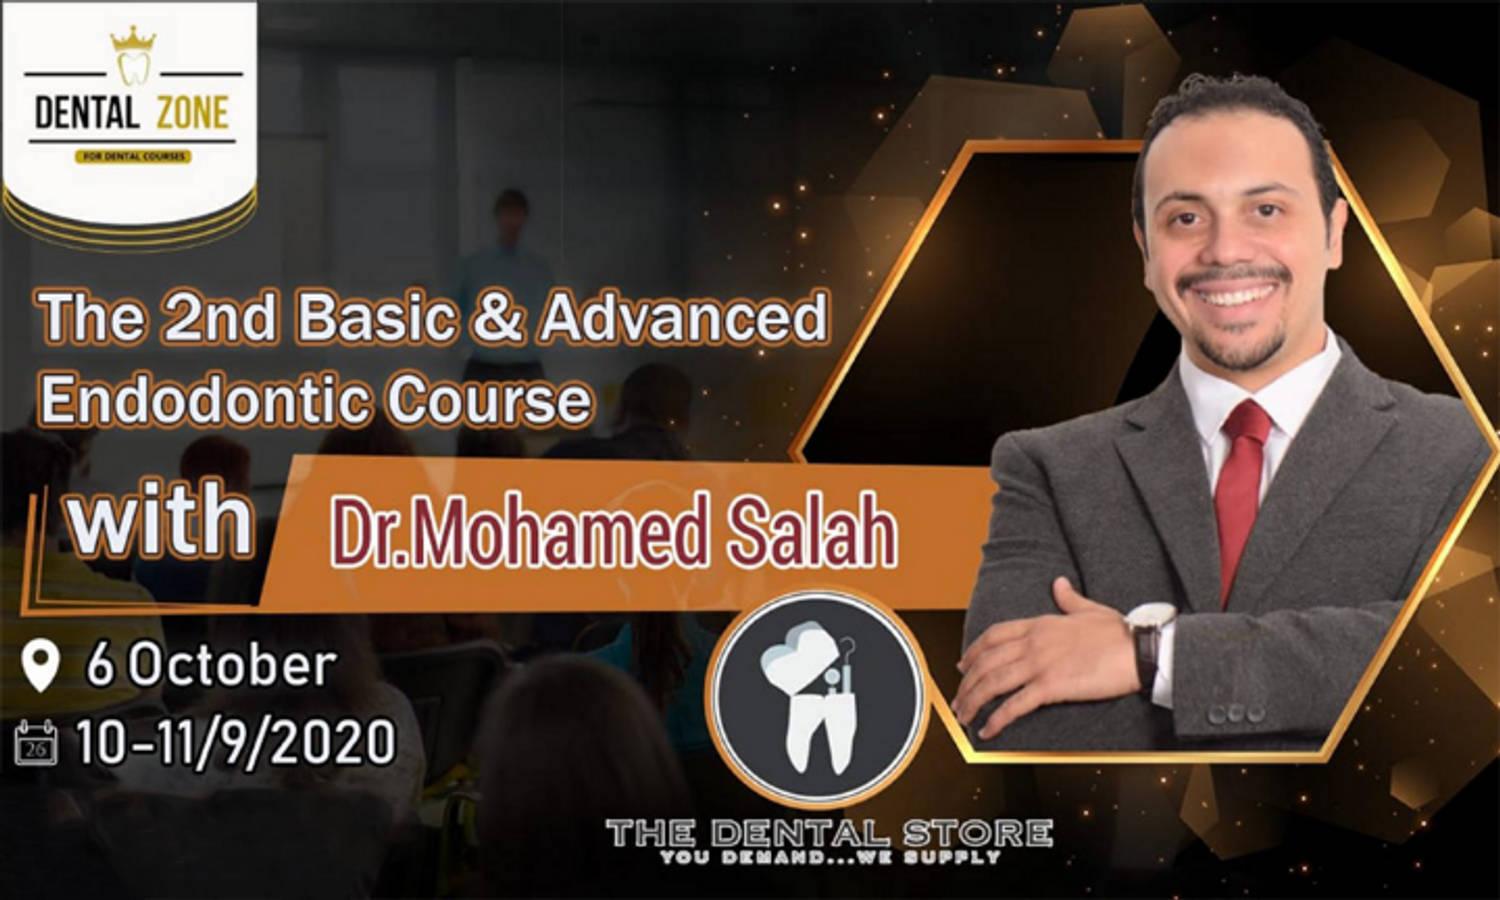 The 2nd Basic & Advanced Endodontics Course